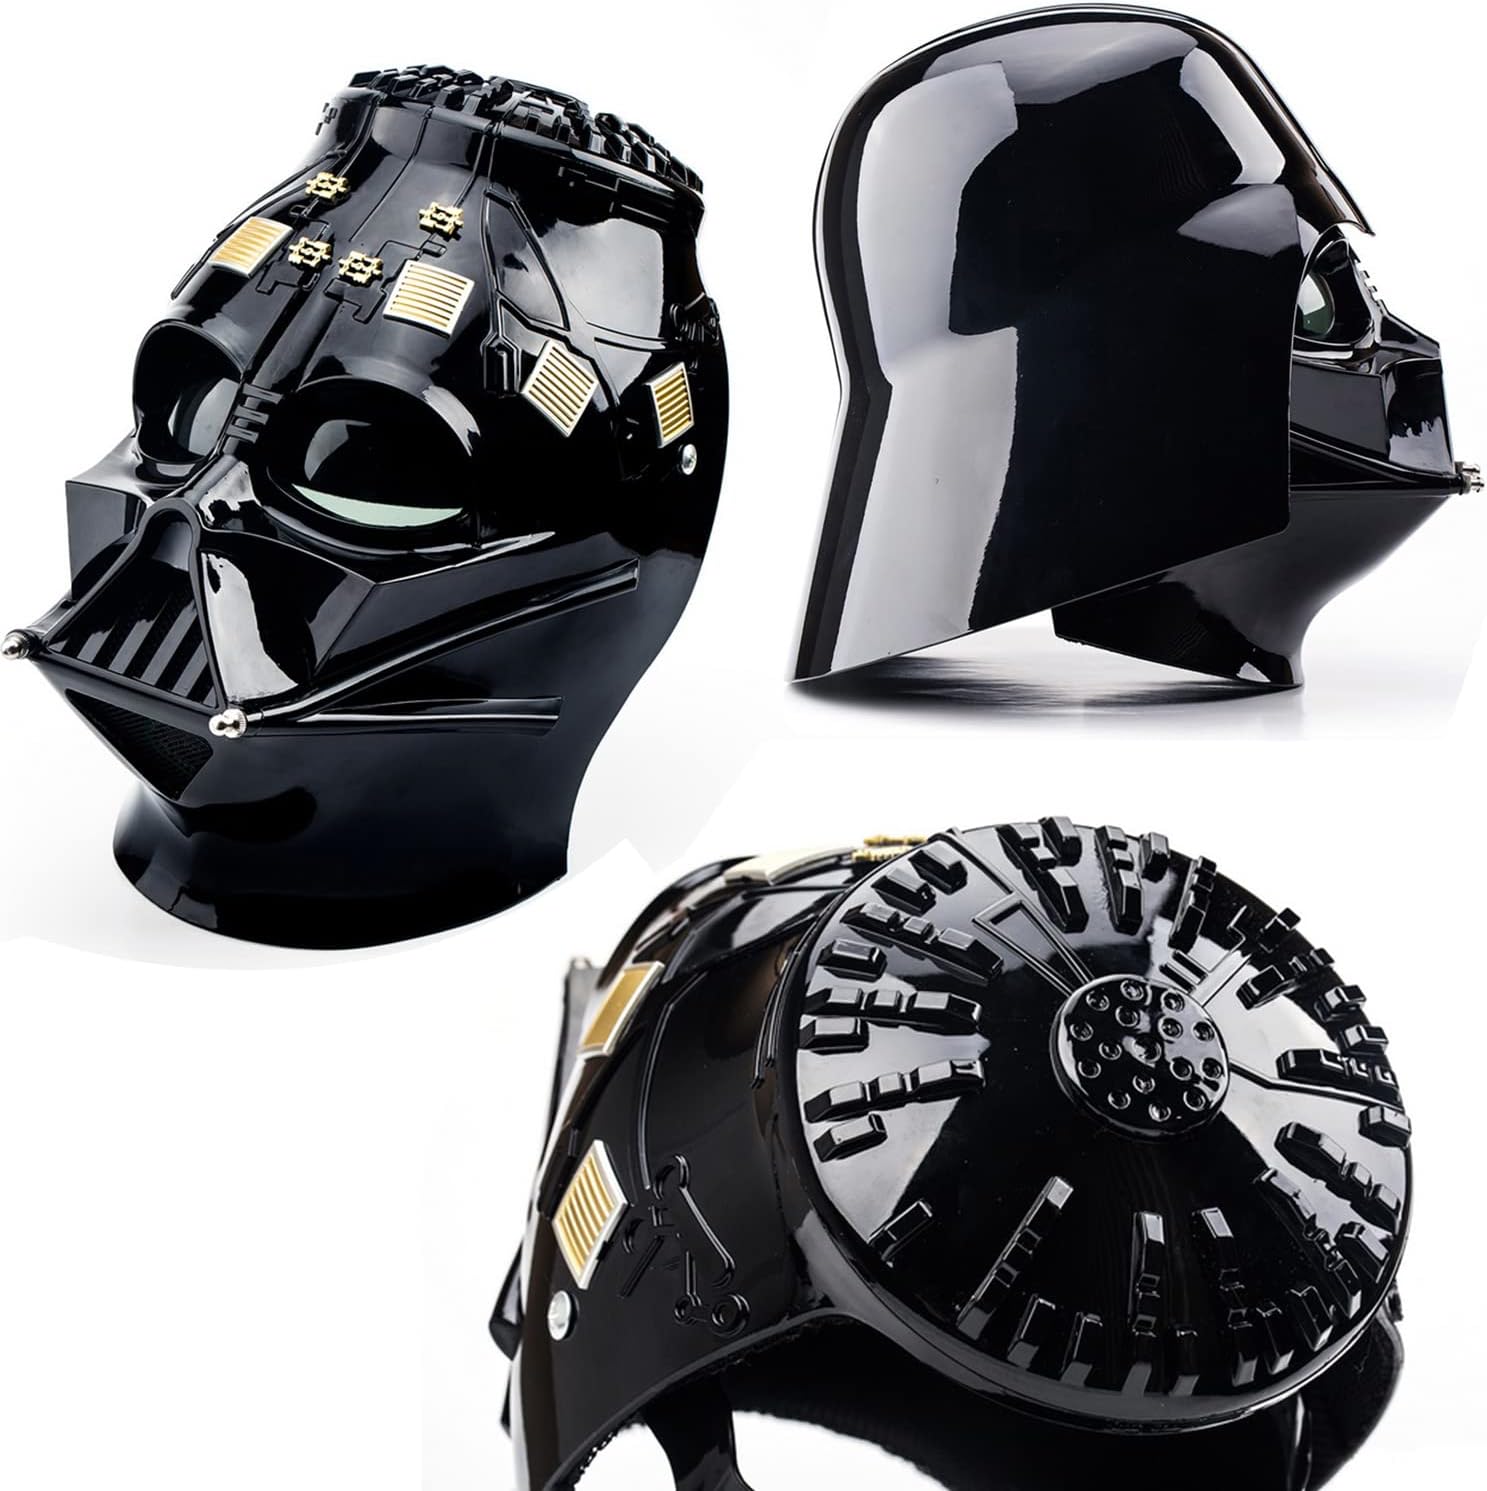 How Much is Darth Vader Helmet